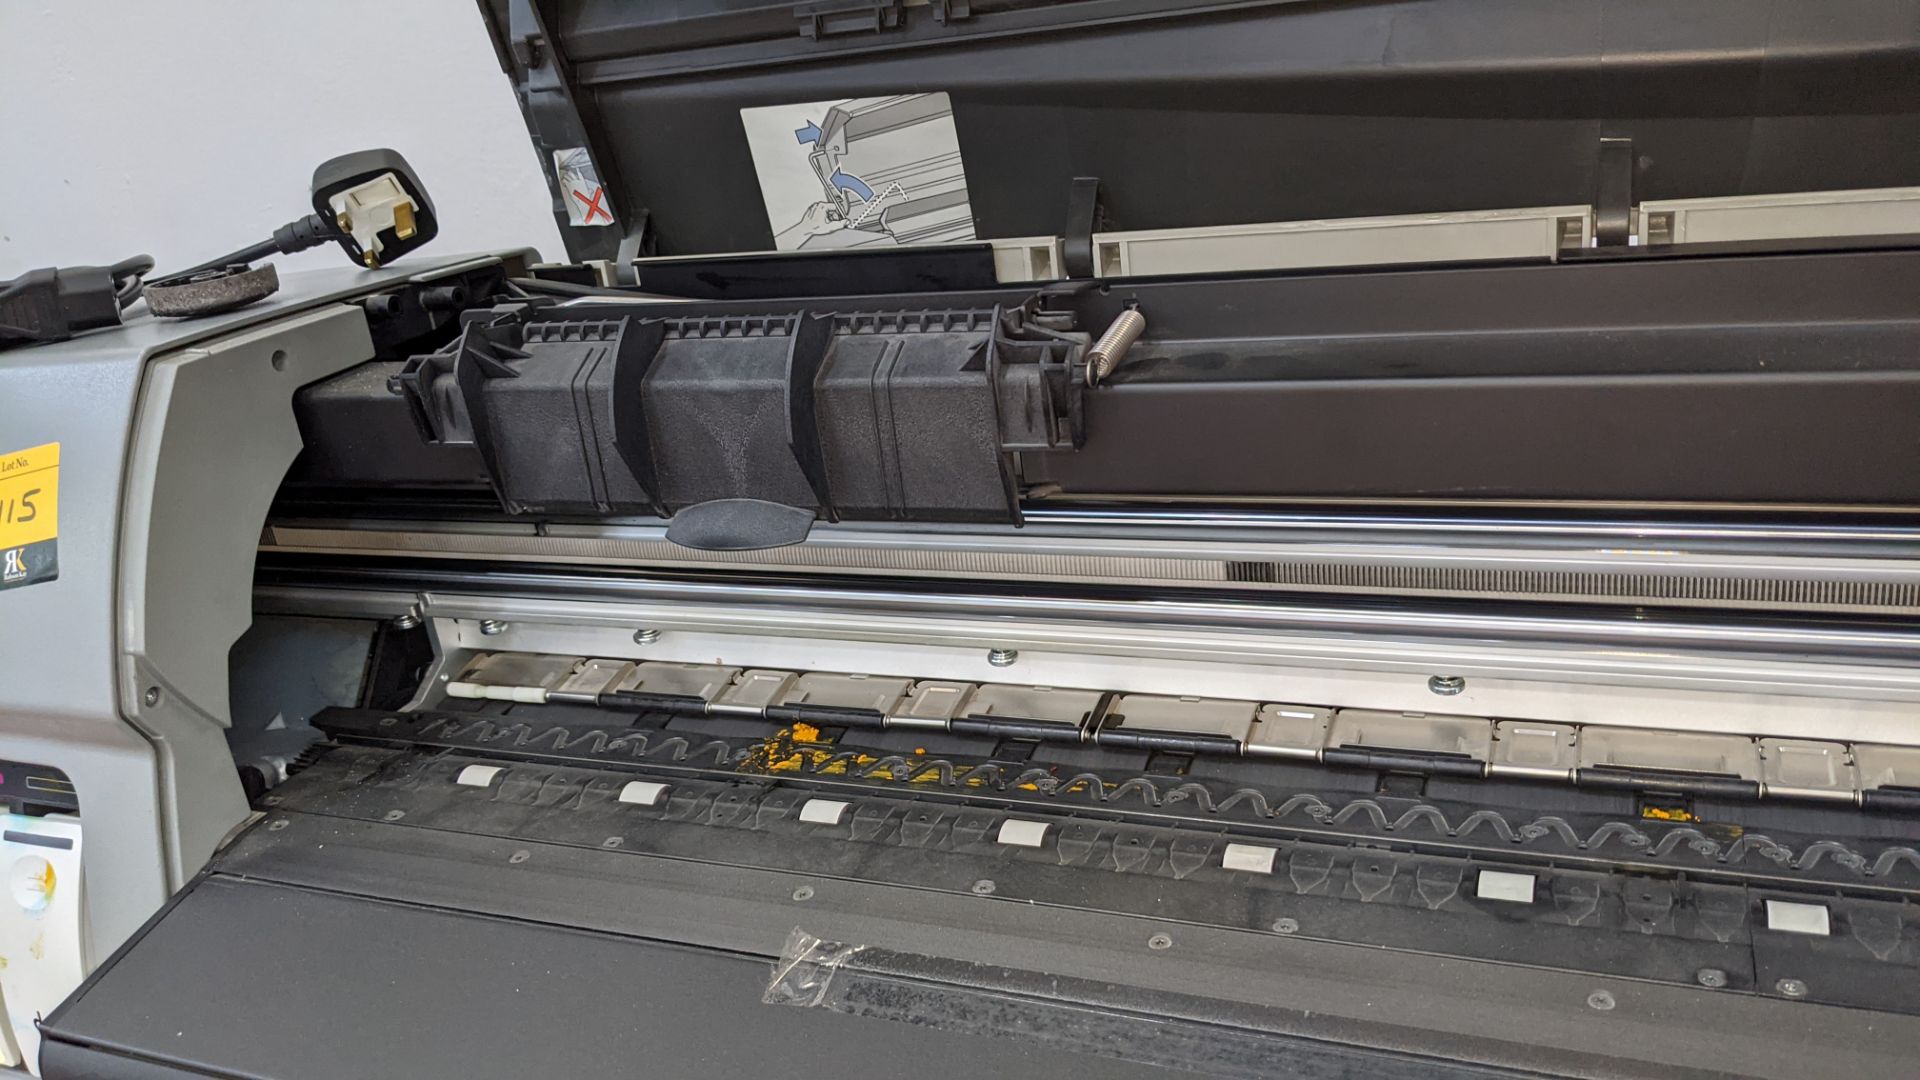 HP DesignJet 5500 wide format printer, - Image 12 of 13